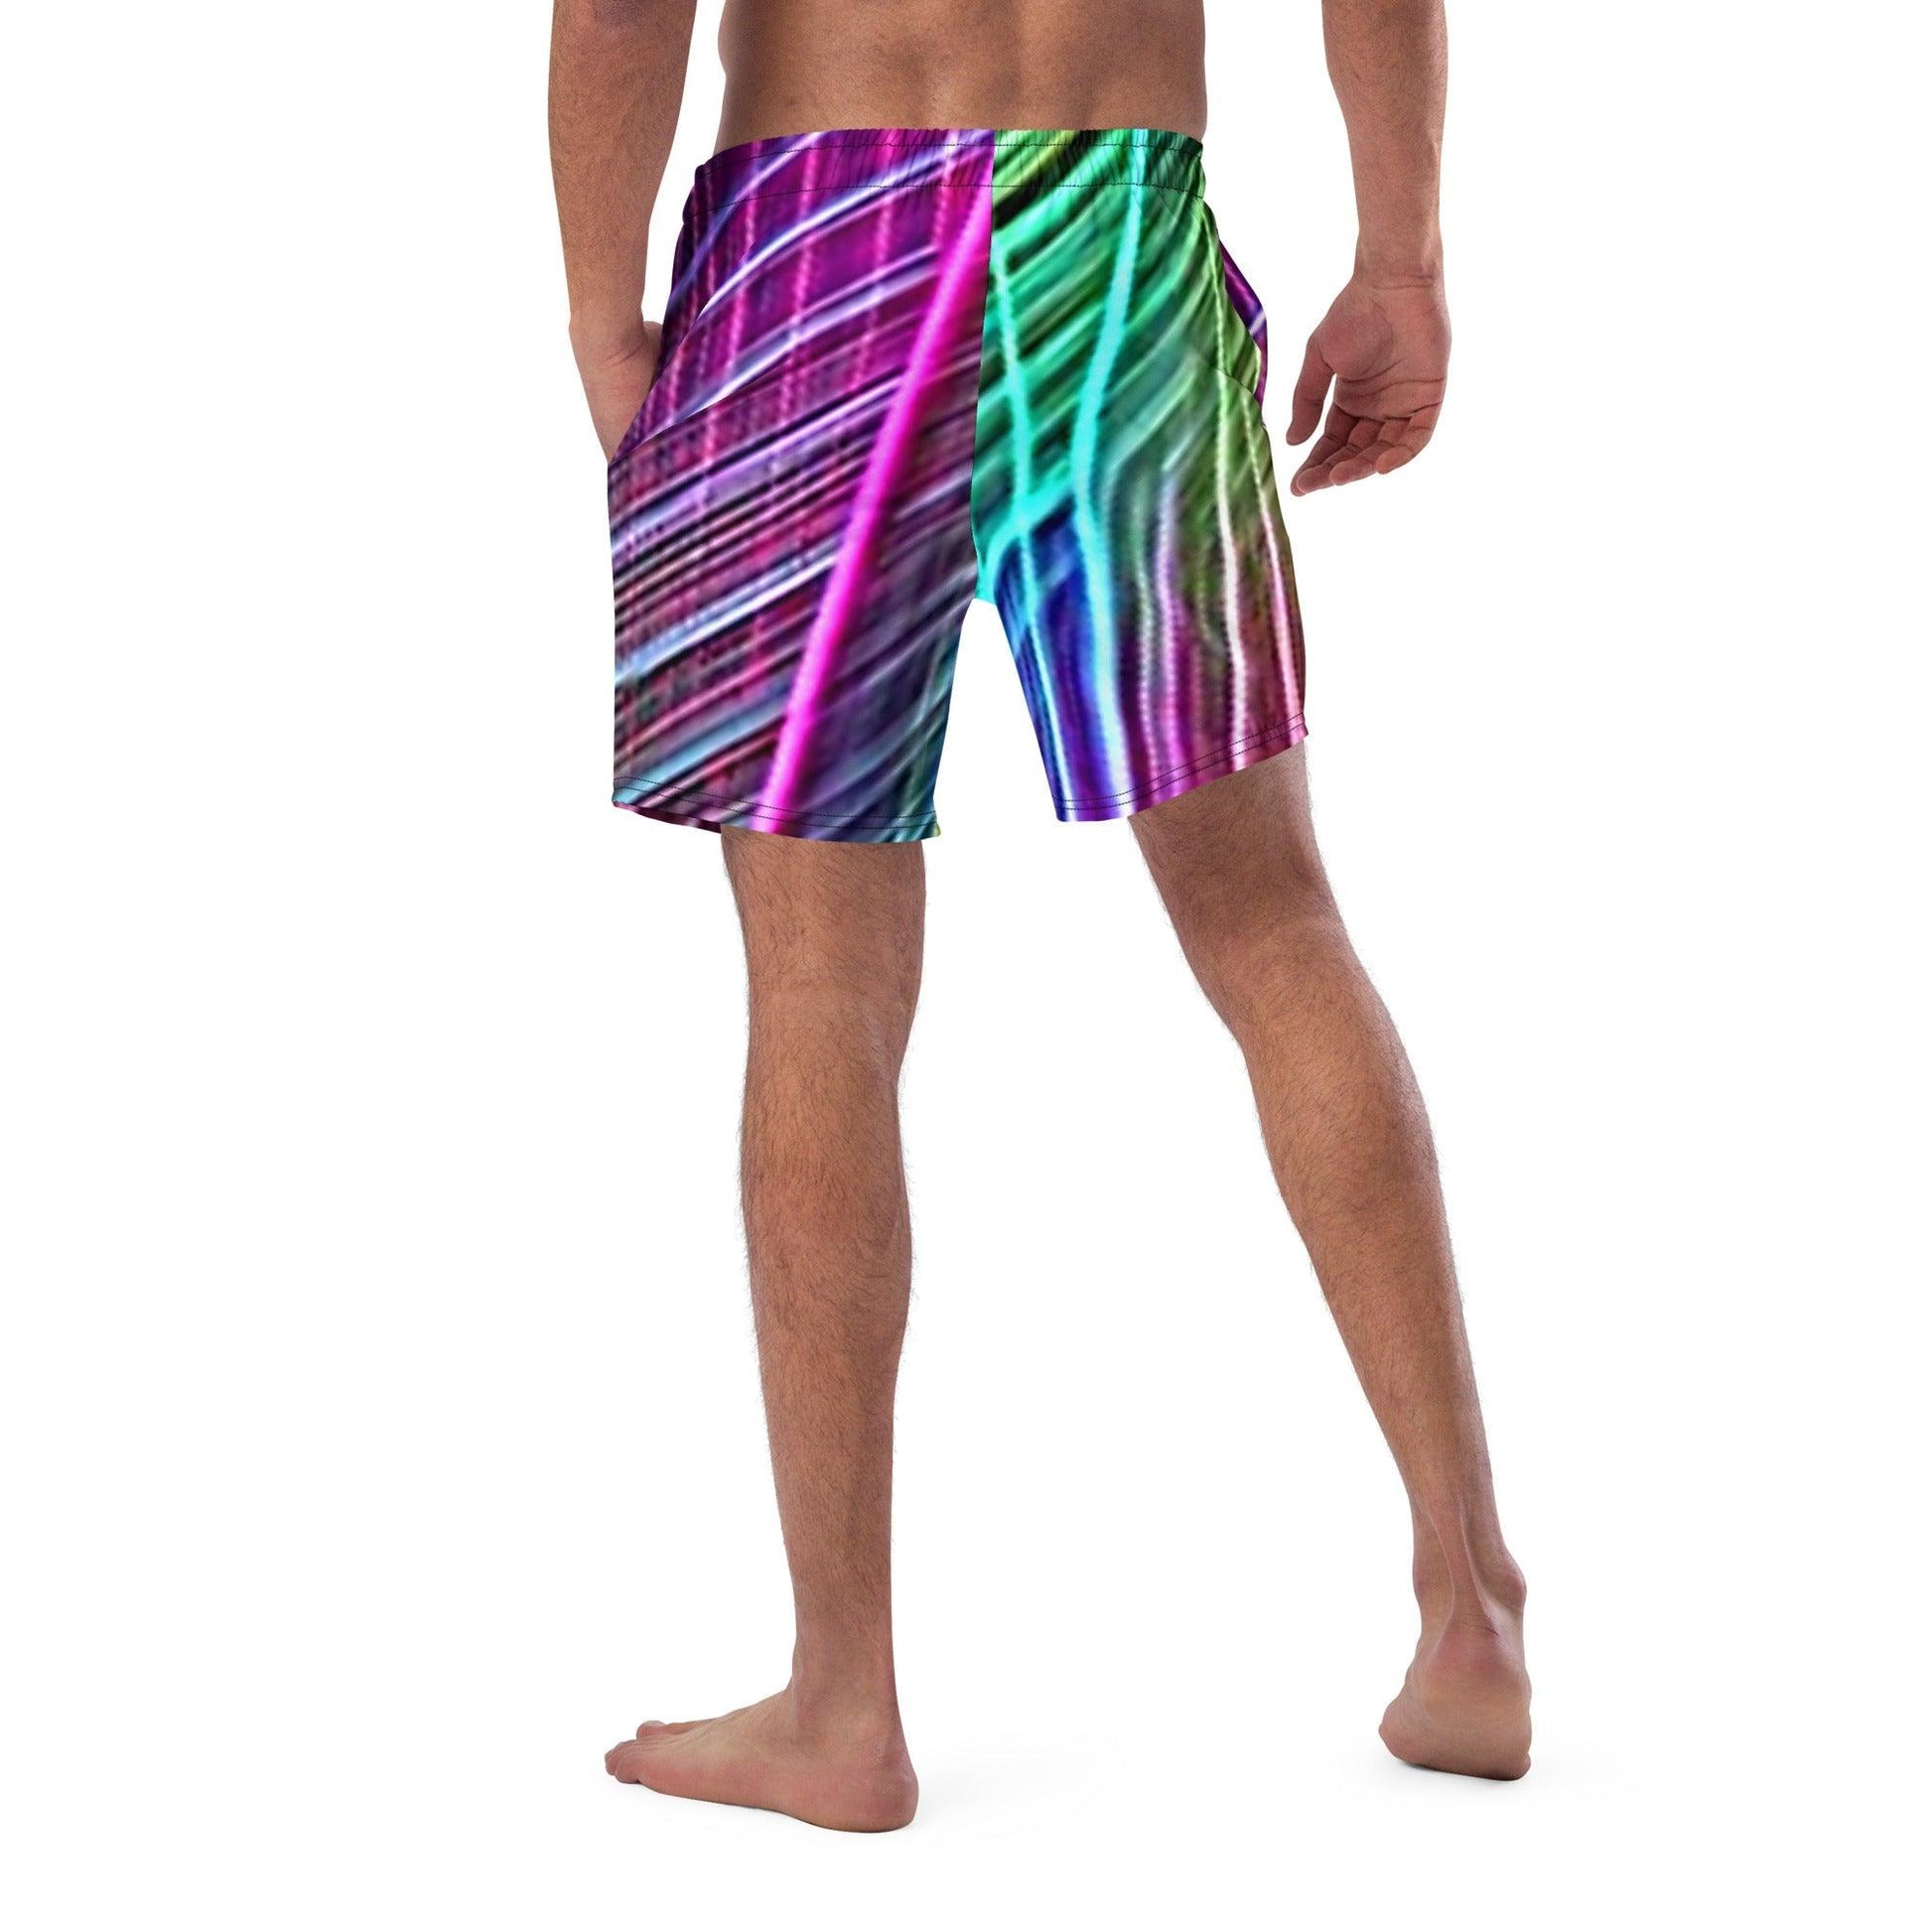 Muliversal 2 Men's Colorful swim trunks - Lizard Vigilante